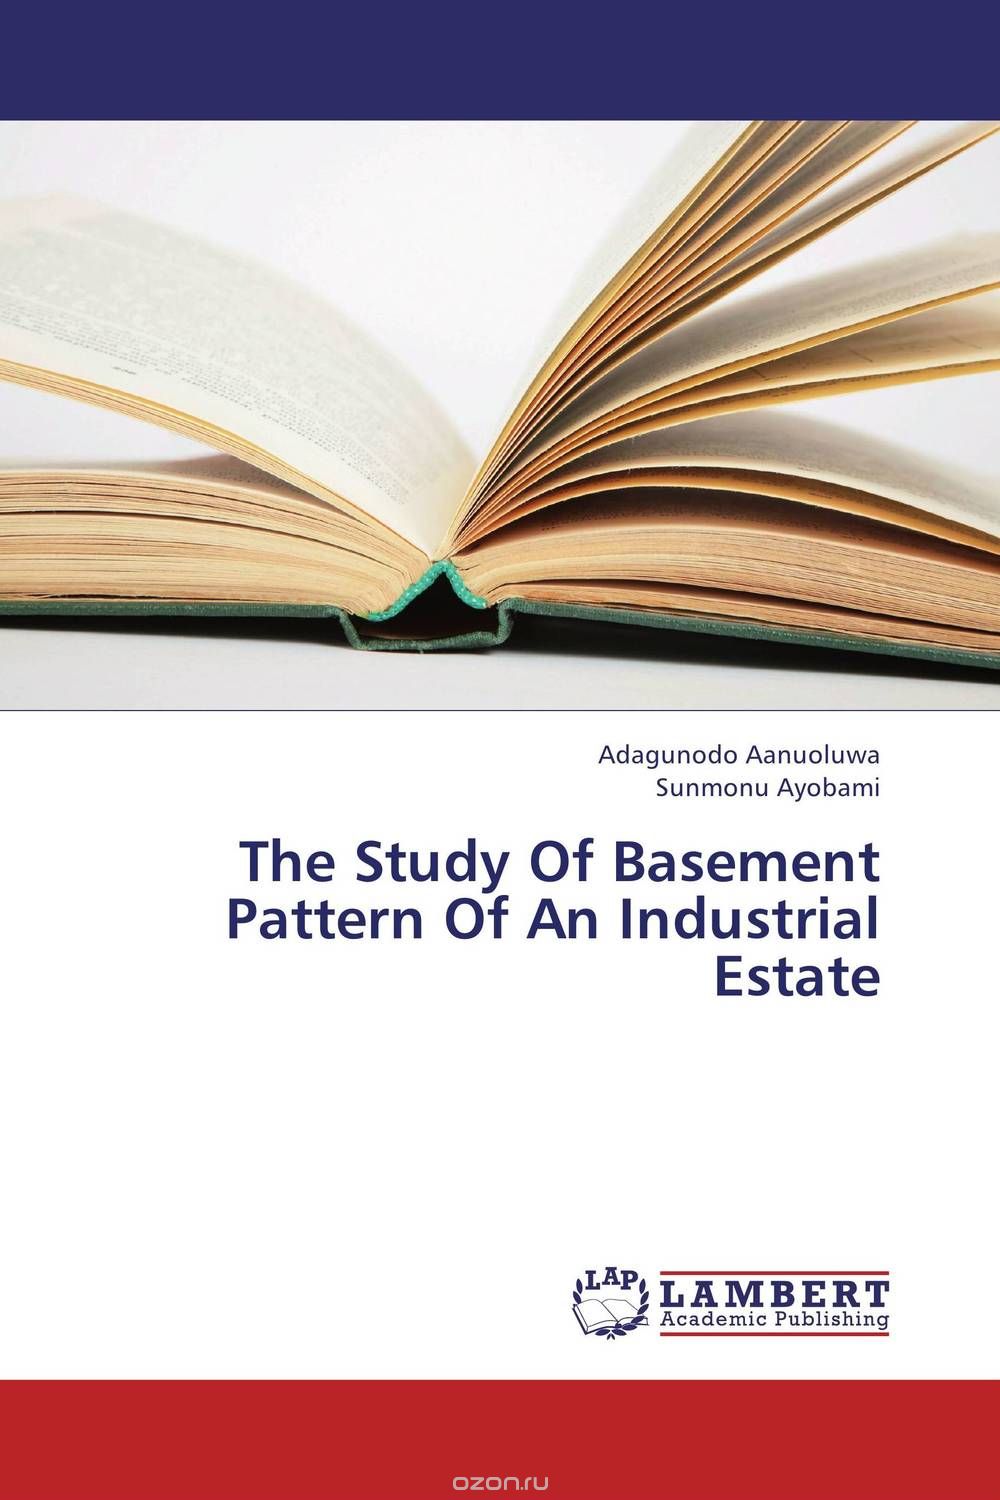 Скачать книгу "The Study Of Basement Pattern Of An Industrial Estate"